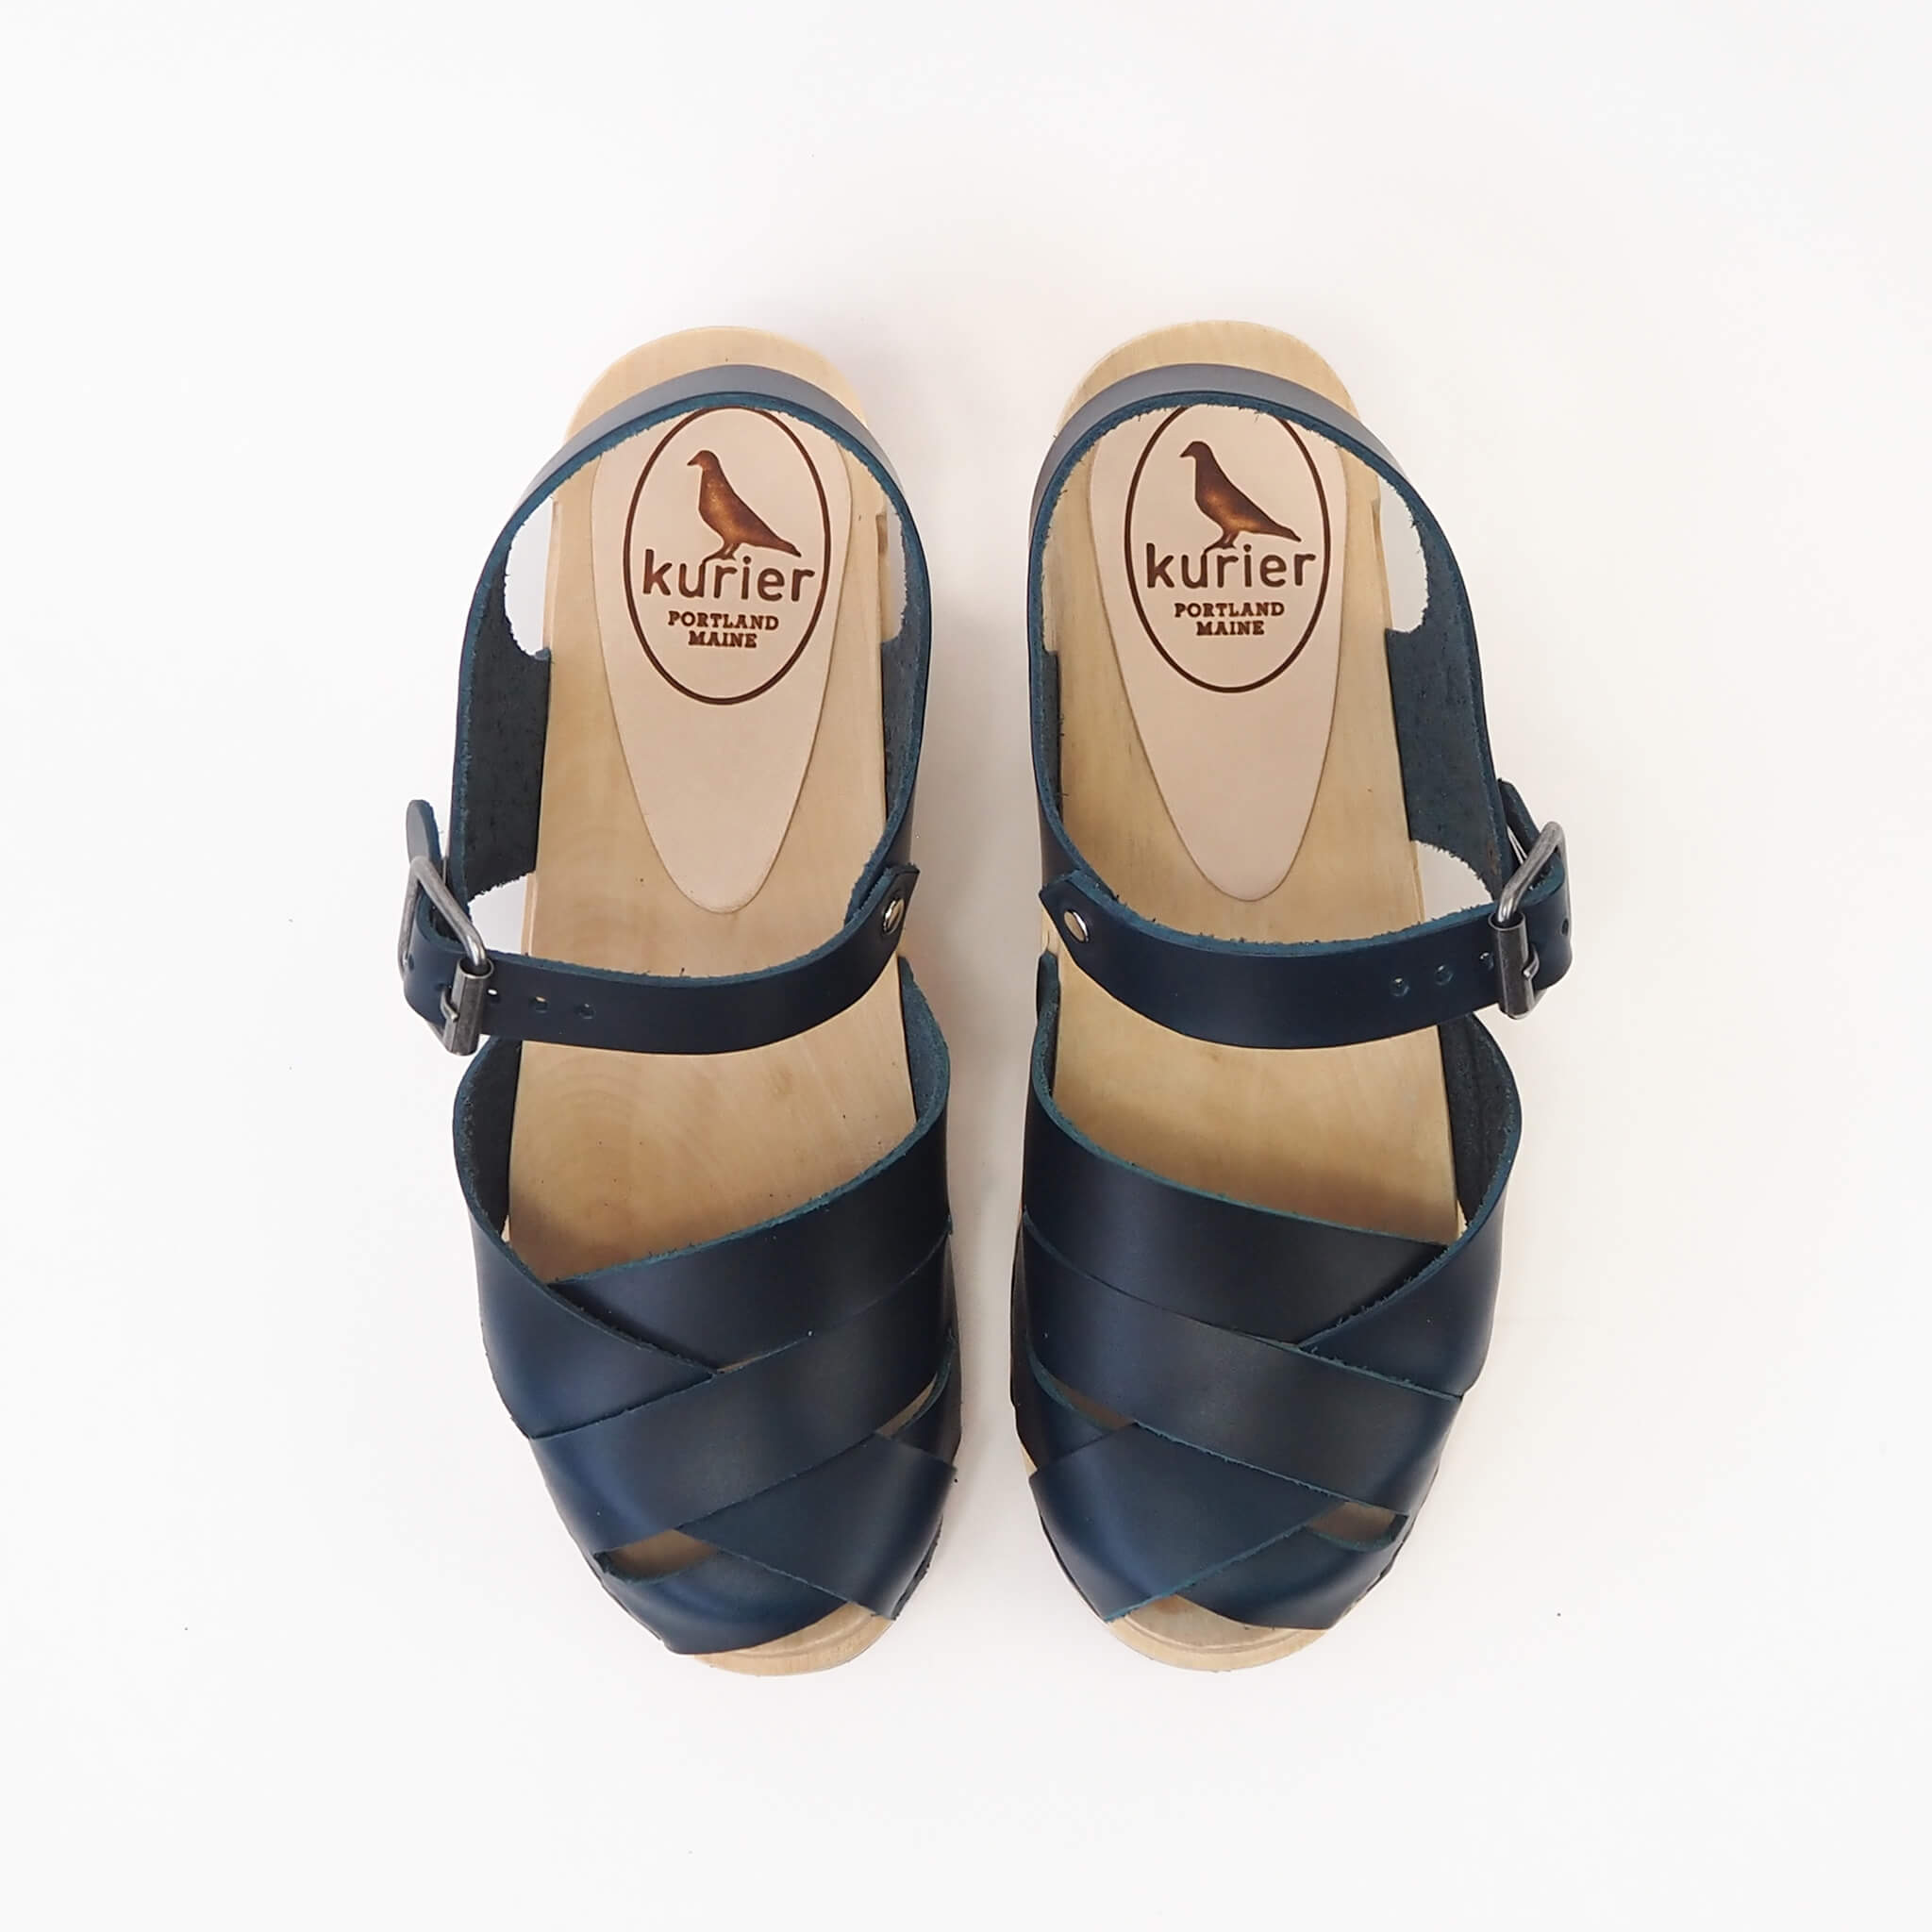 emelia clog high heel peep toe mary janesandal handmade american leather wood - denim top view